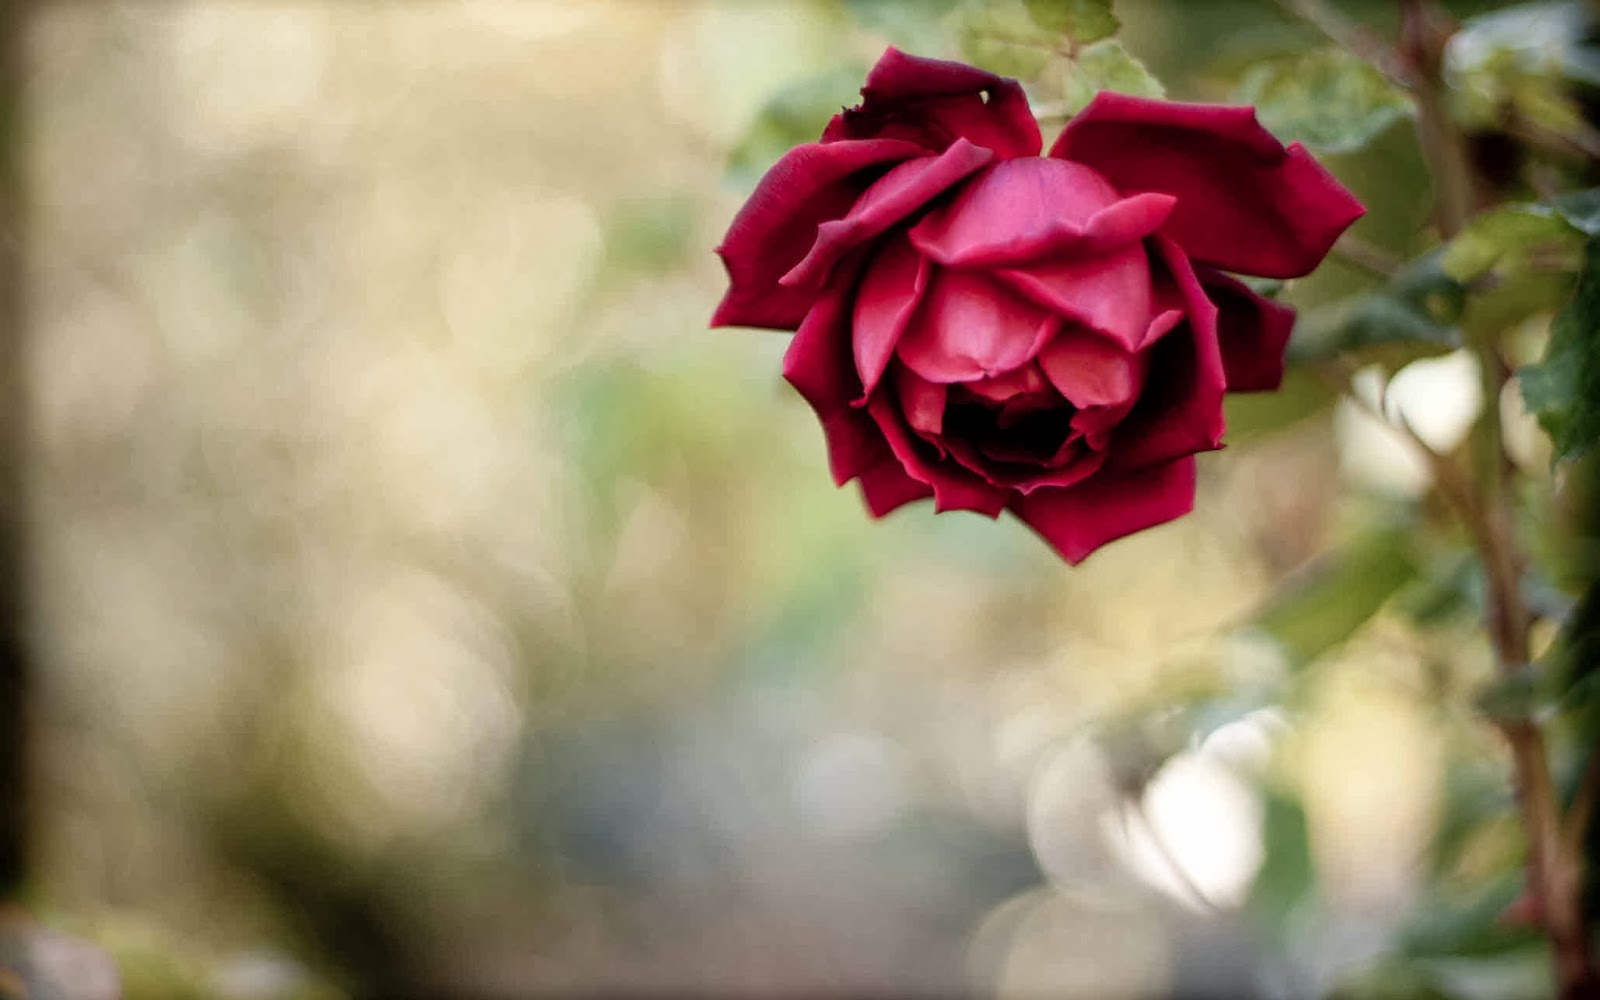 rose flower wallpaper hd descarga gratuita,flor,rosas de jardín,rojo,pétalo,naturaleza